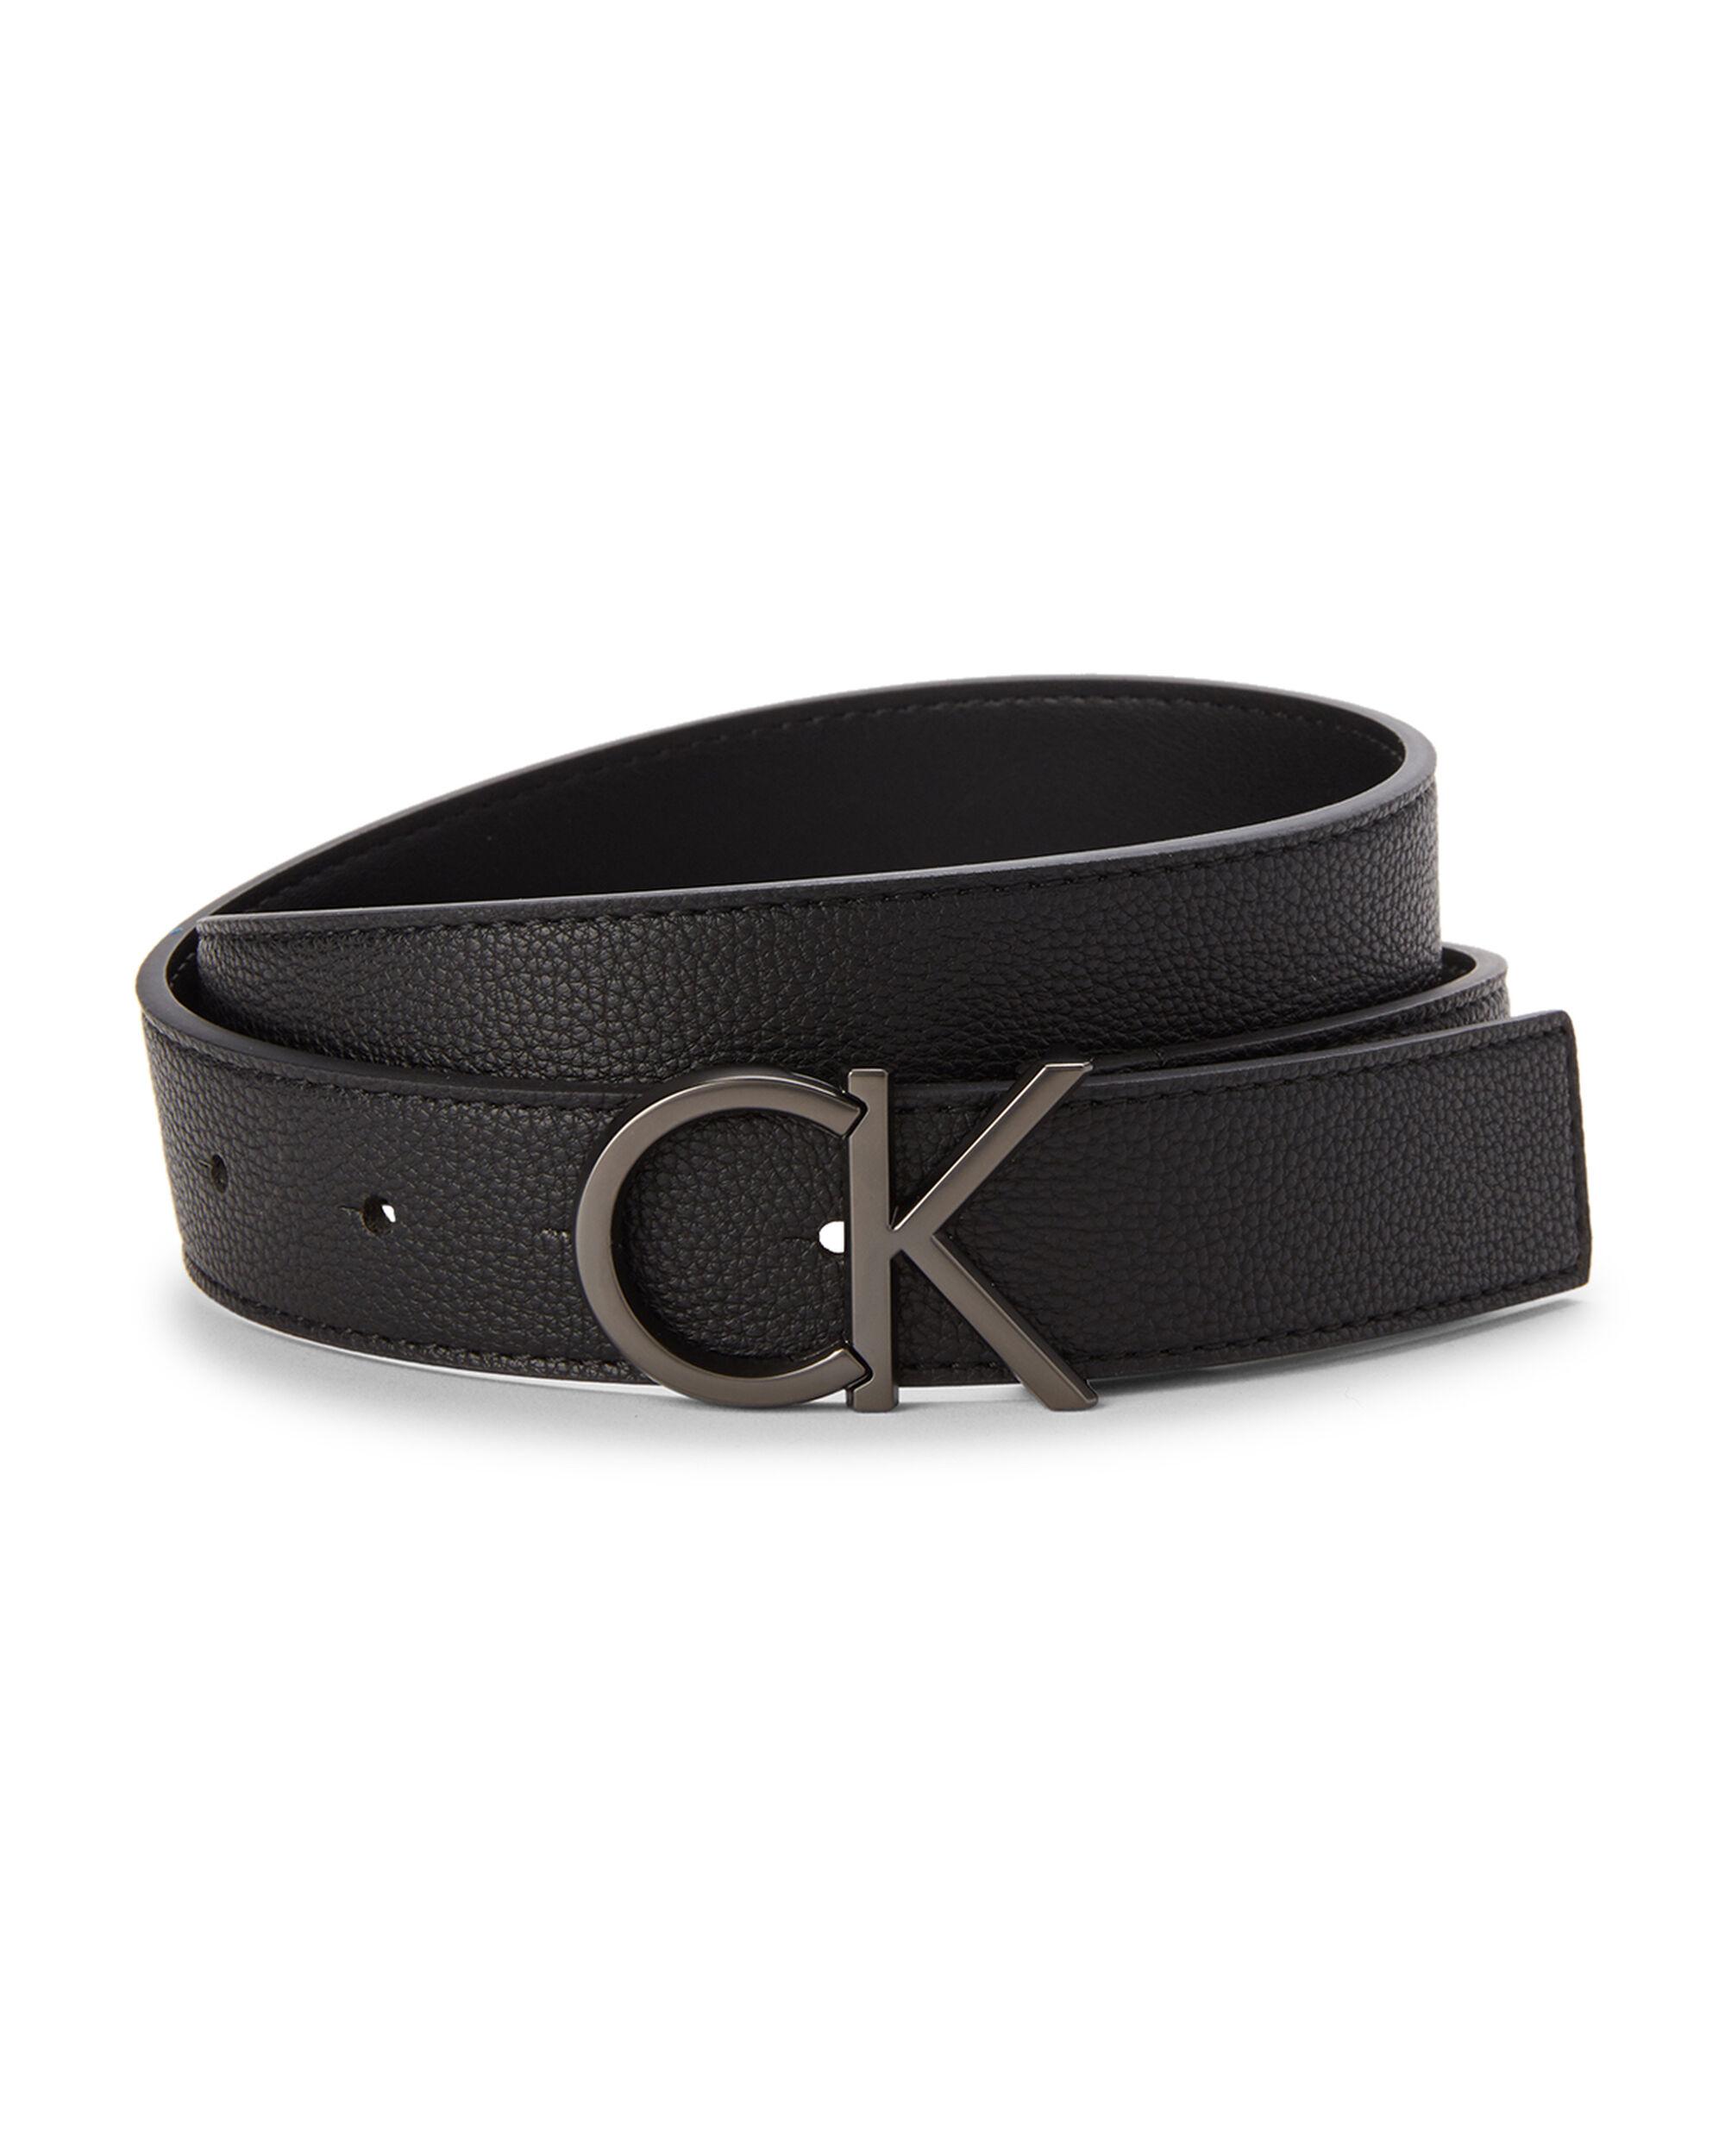 Calvin Klein Black Pebbled Faux Leather Belt for Men - Lyst